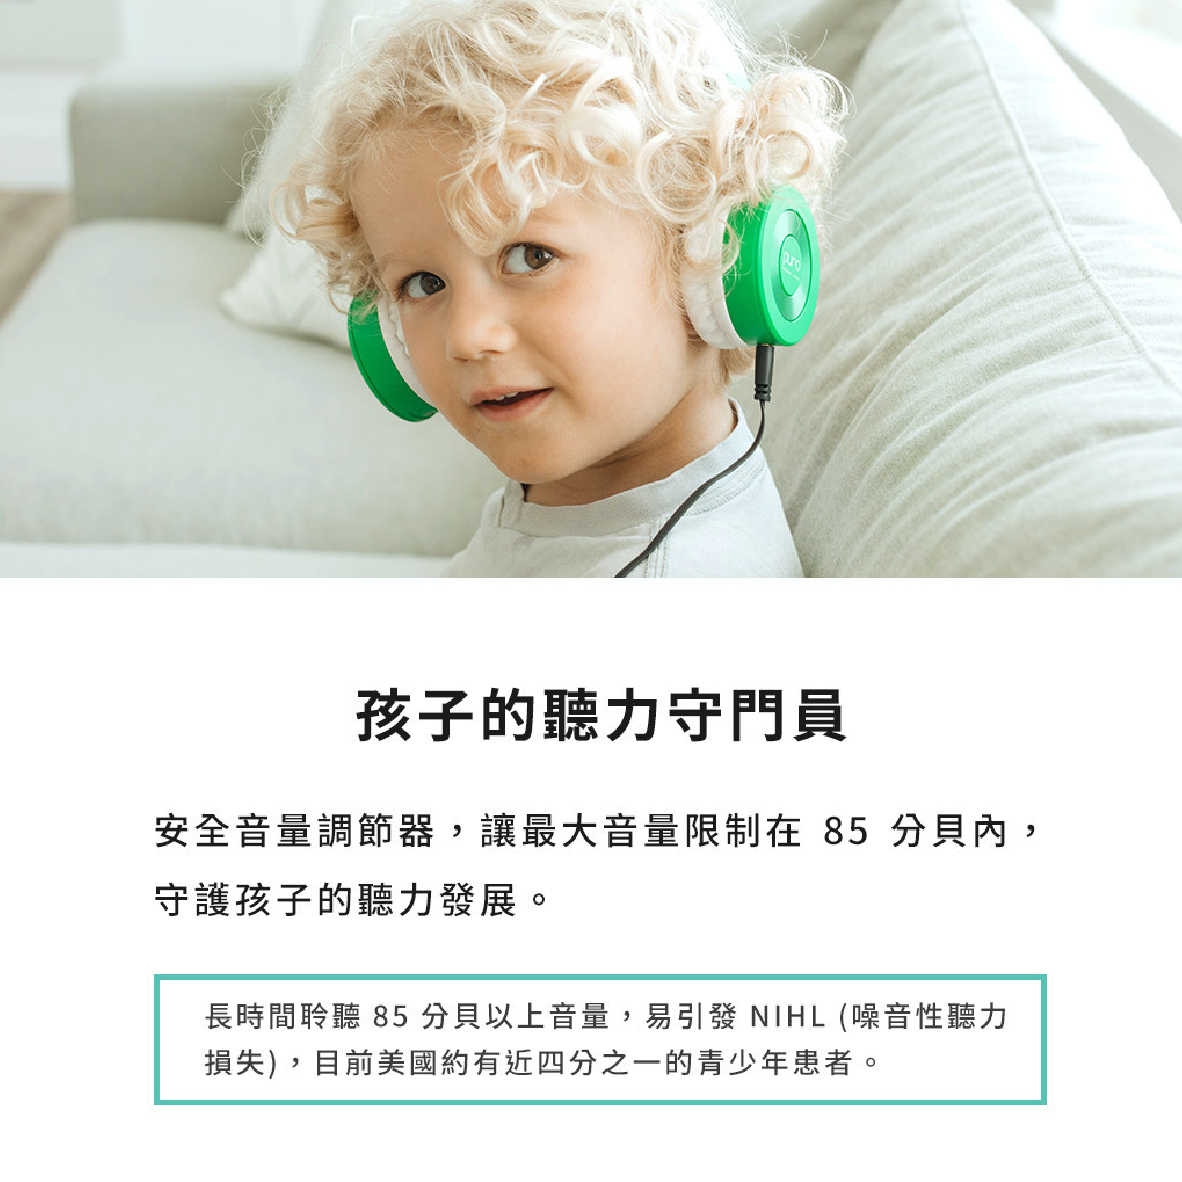 Puro JuniorJams 粉紅色 內建麥克風 22hr續航 音量控制 兒童耳機 耳罩式耳機 | 金曲音響